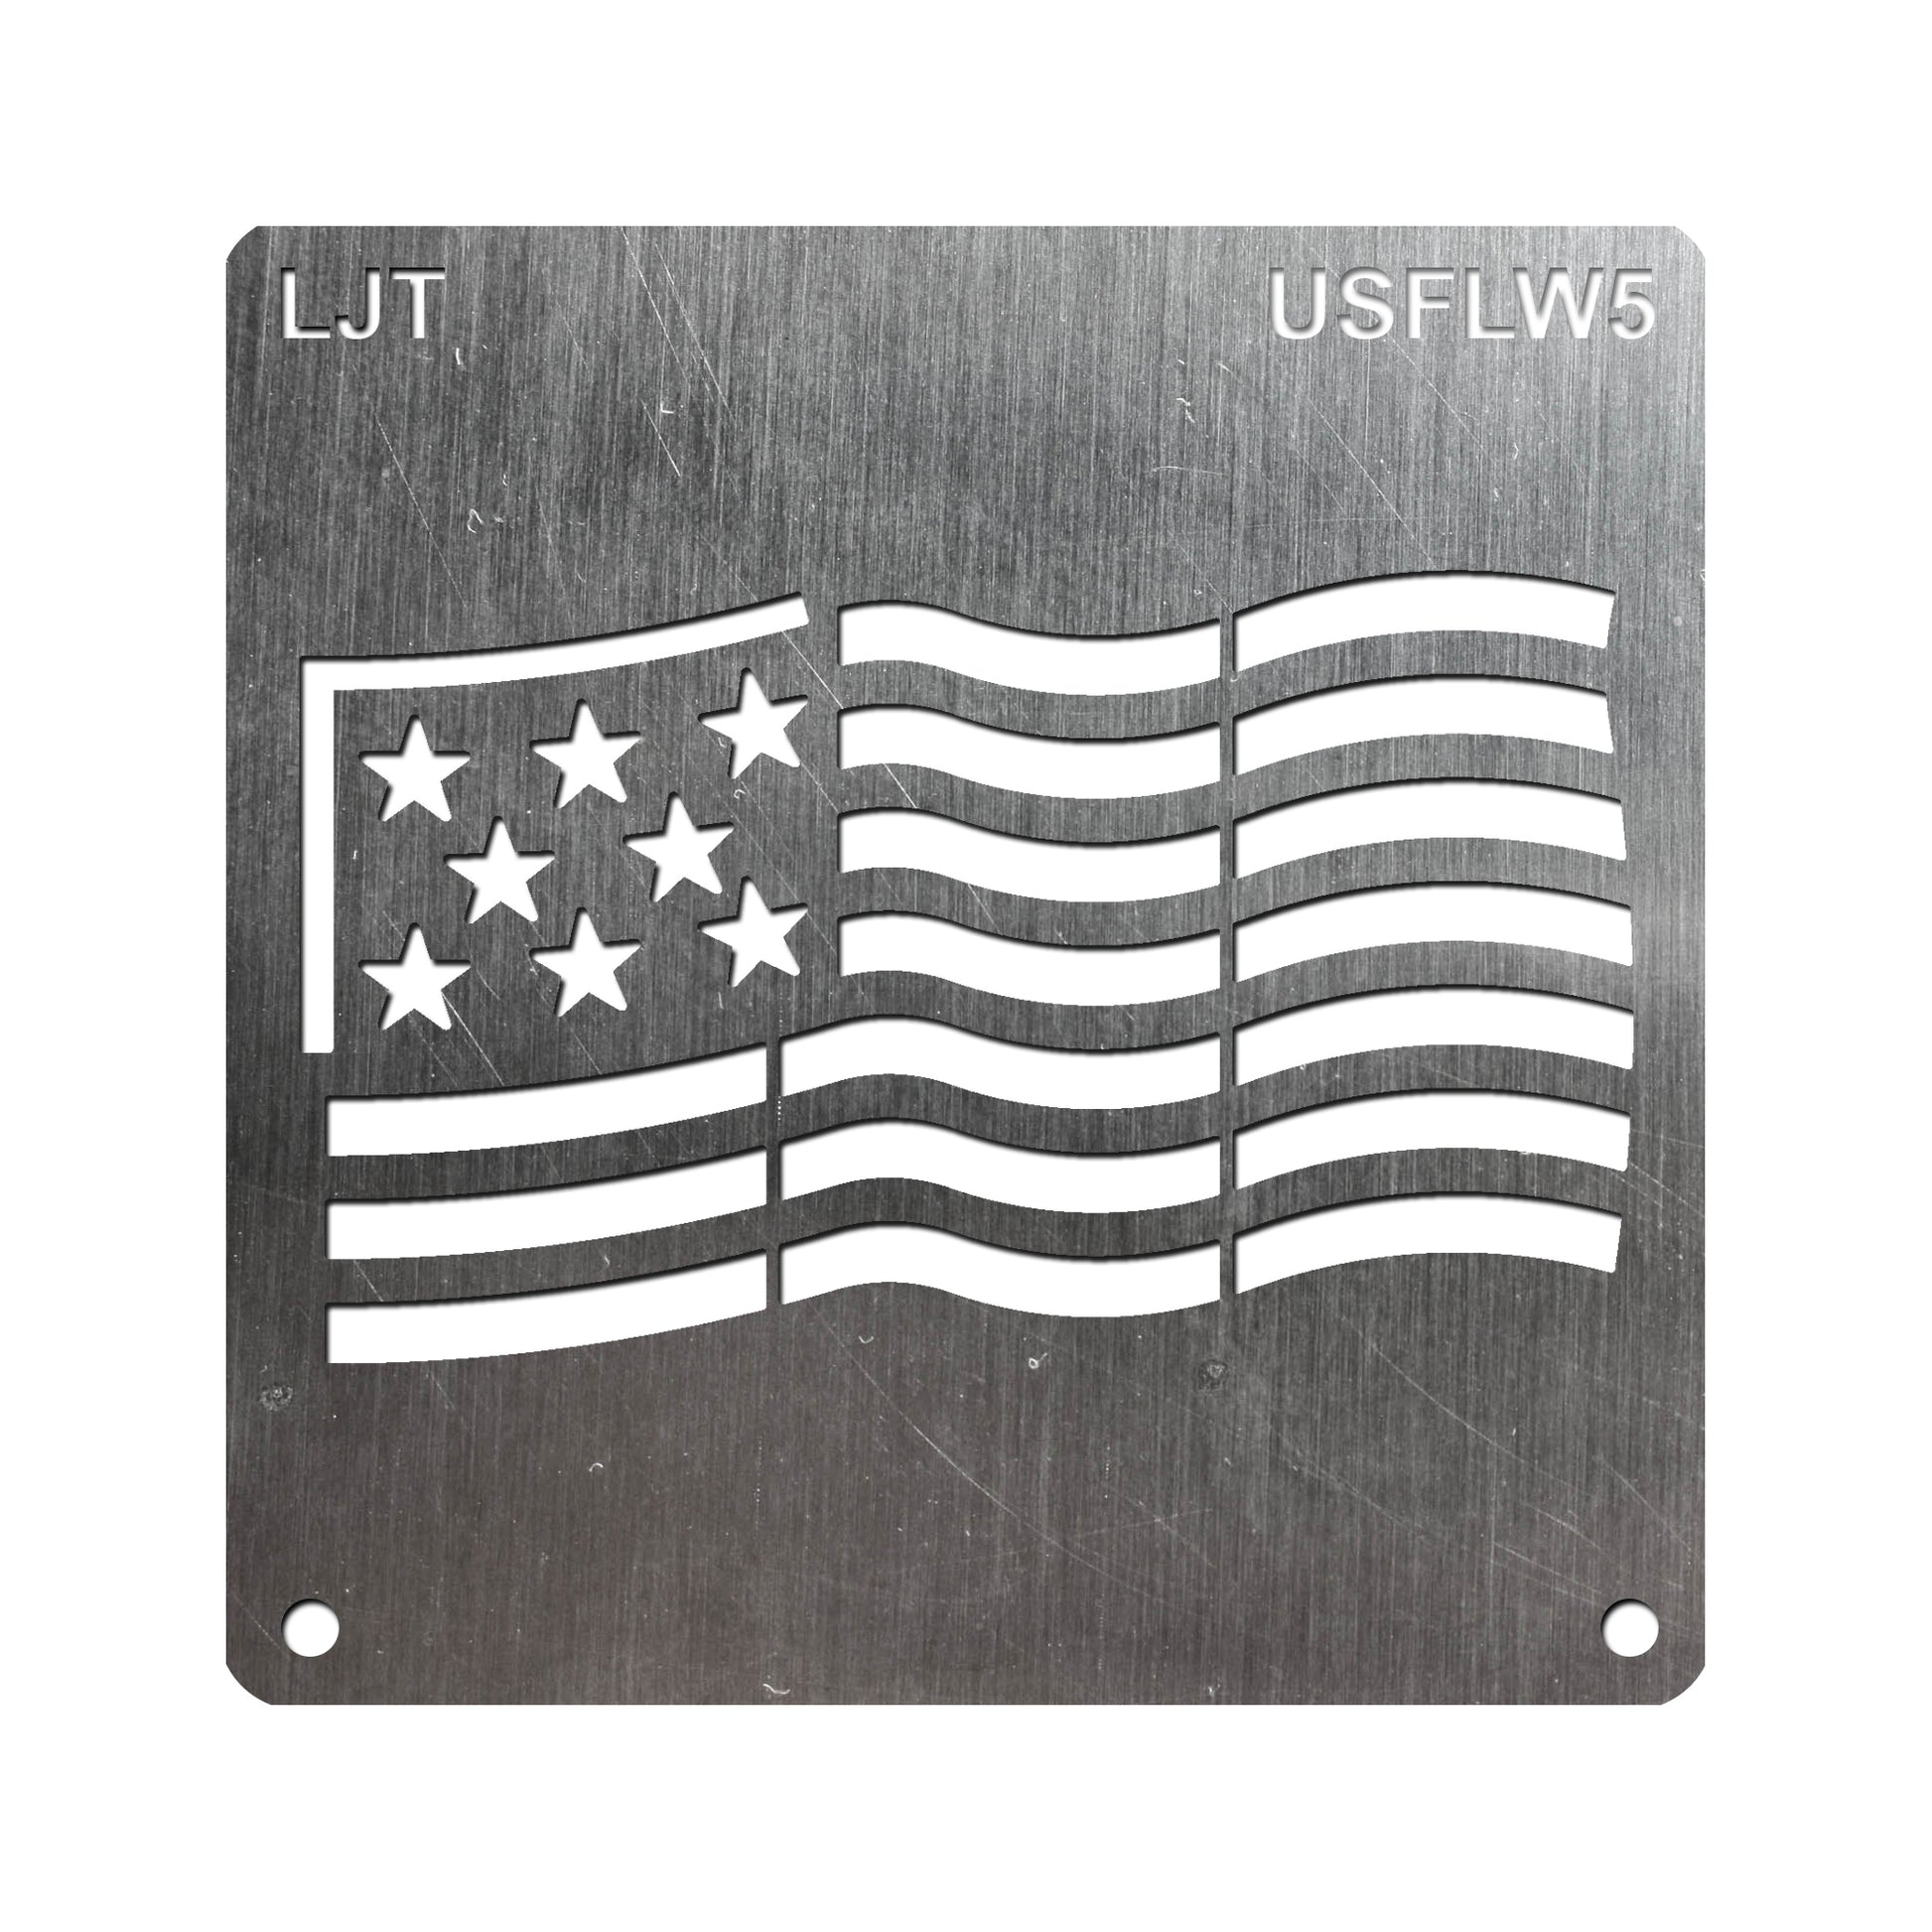  Waving American Flag Stencil - Cool Stencils